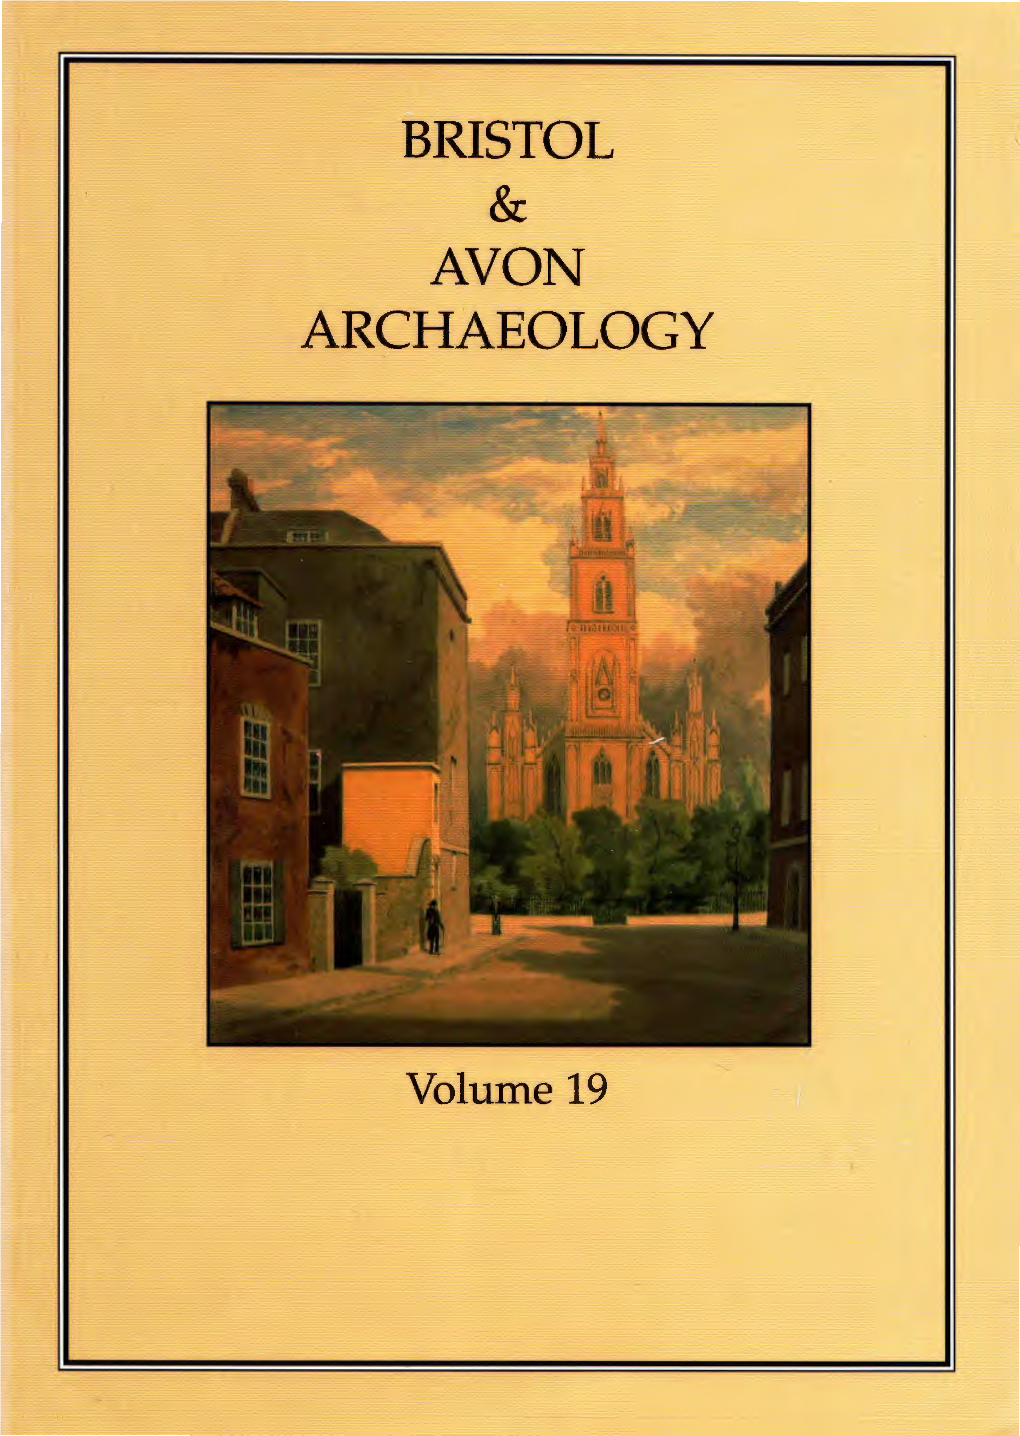 Volume 19 BRISTOL and AVON ARCHAEOLOGY 2004